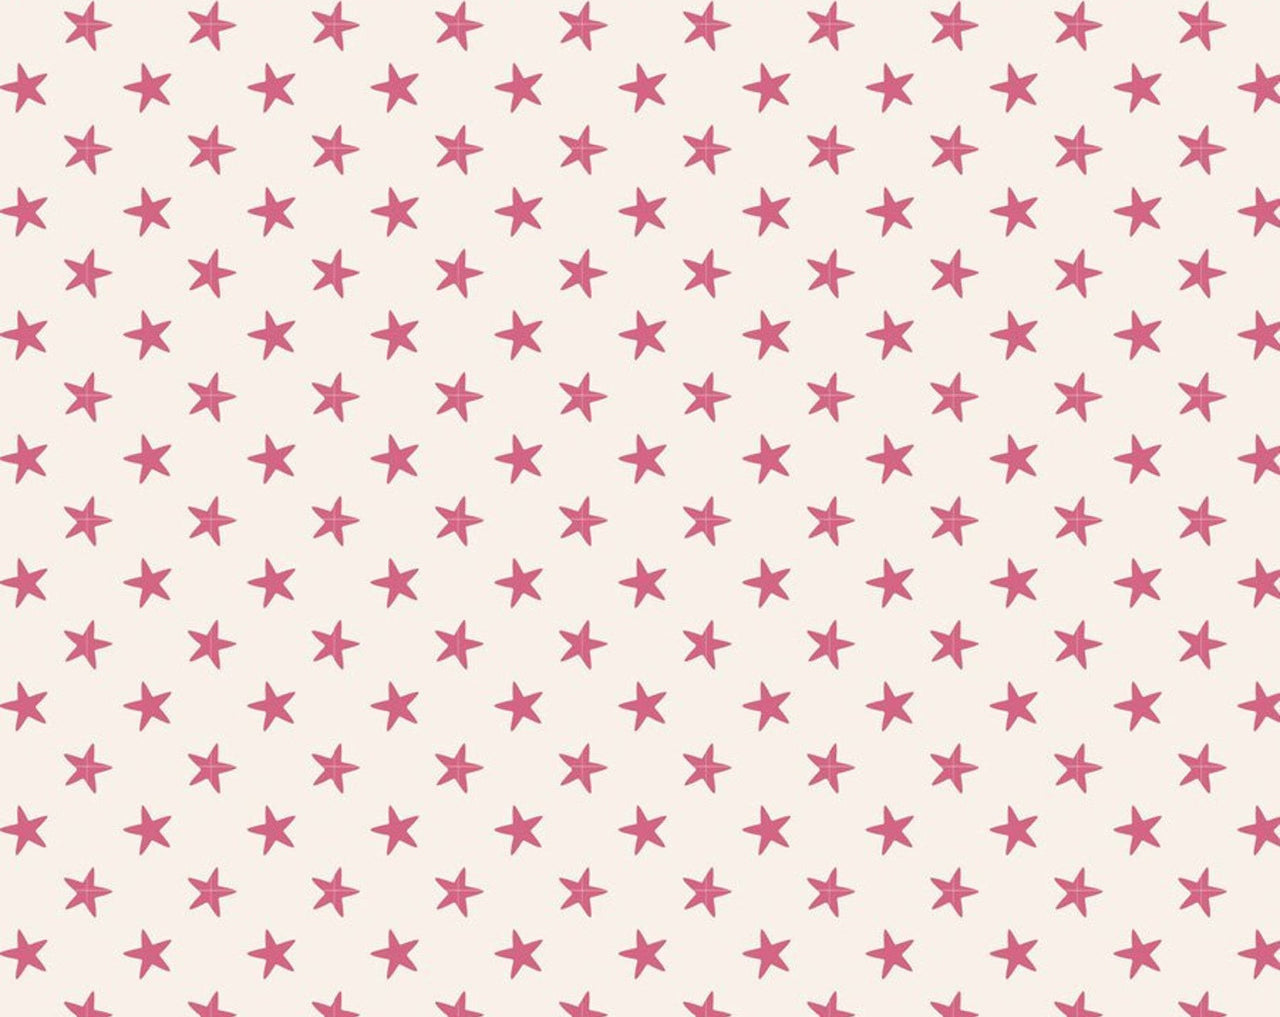 Tilda Classic Basic Tiny Star Pink available via Yardage 100% Premium Quilting Cotton